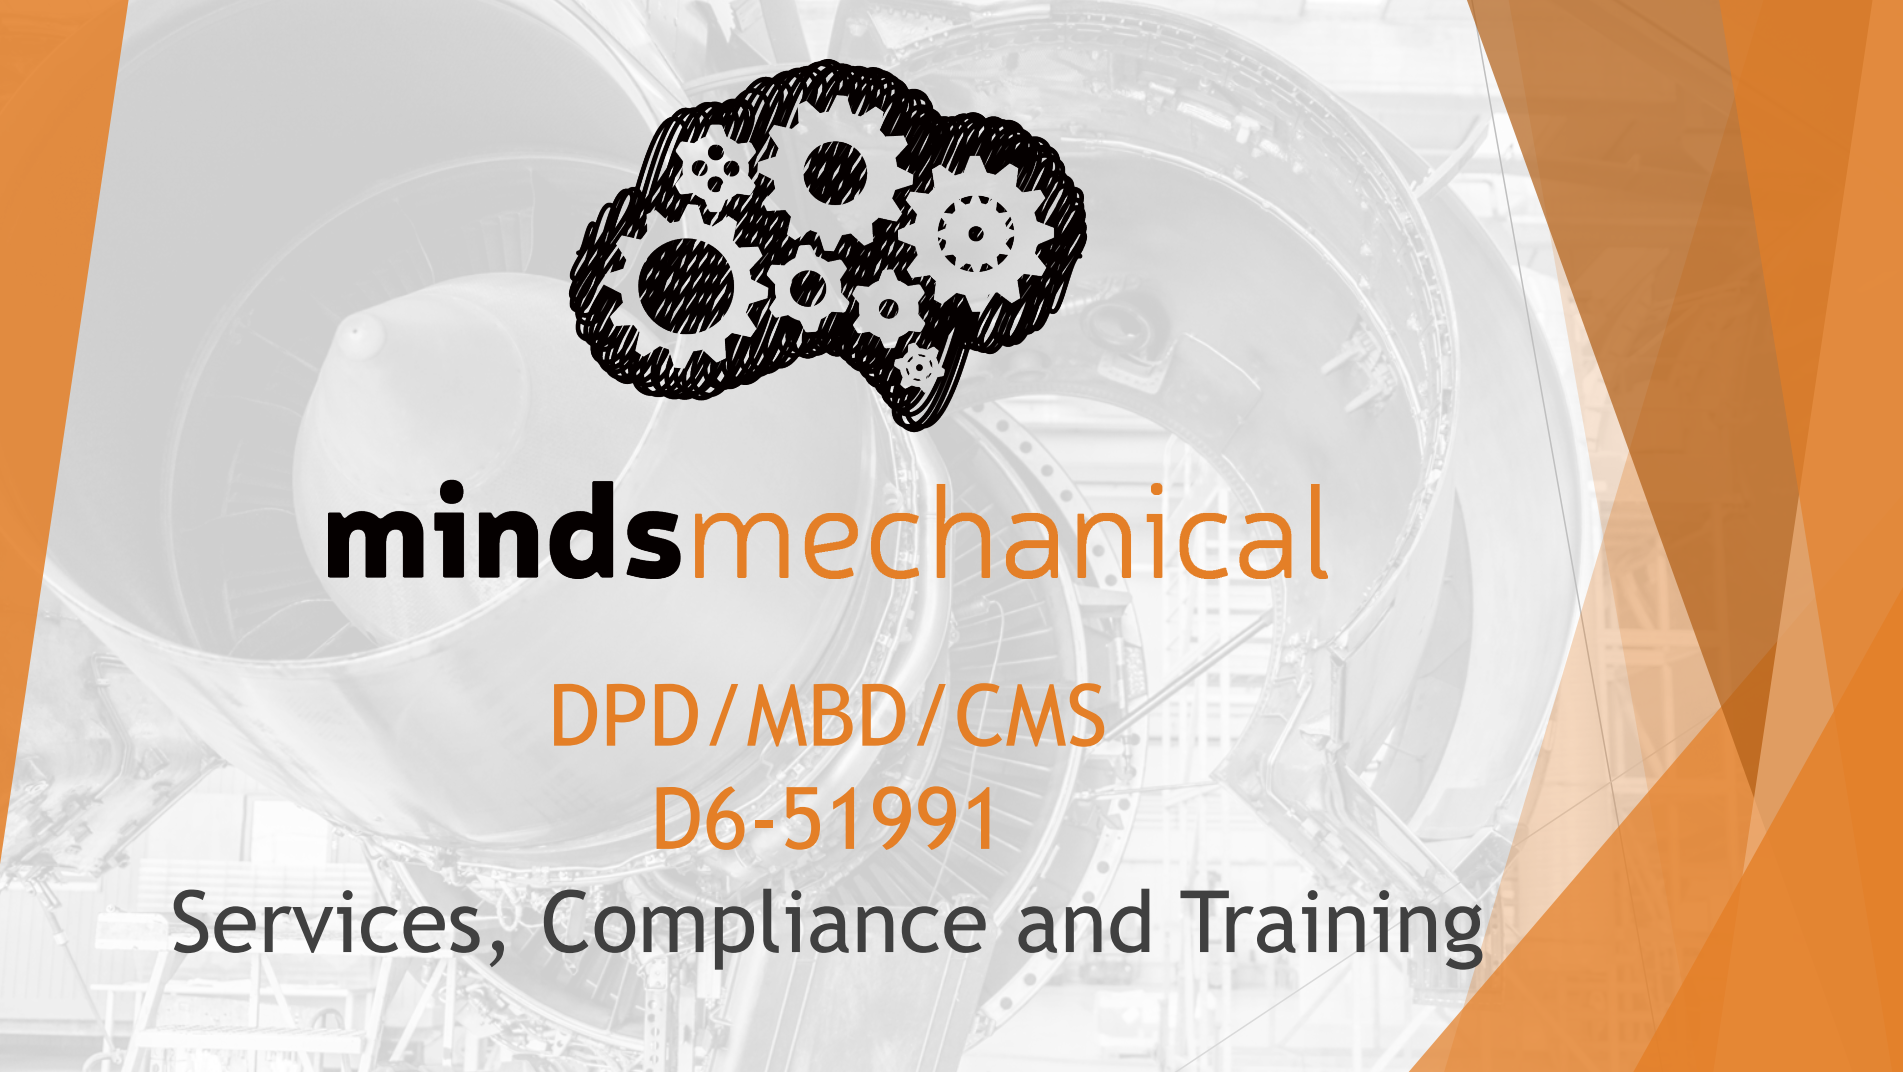 Minds Mechanical aerospace supplier score flyer.